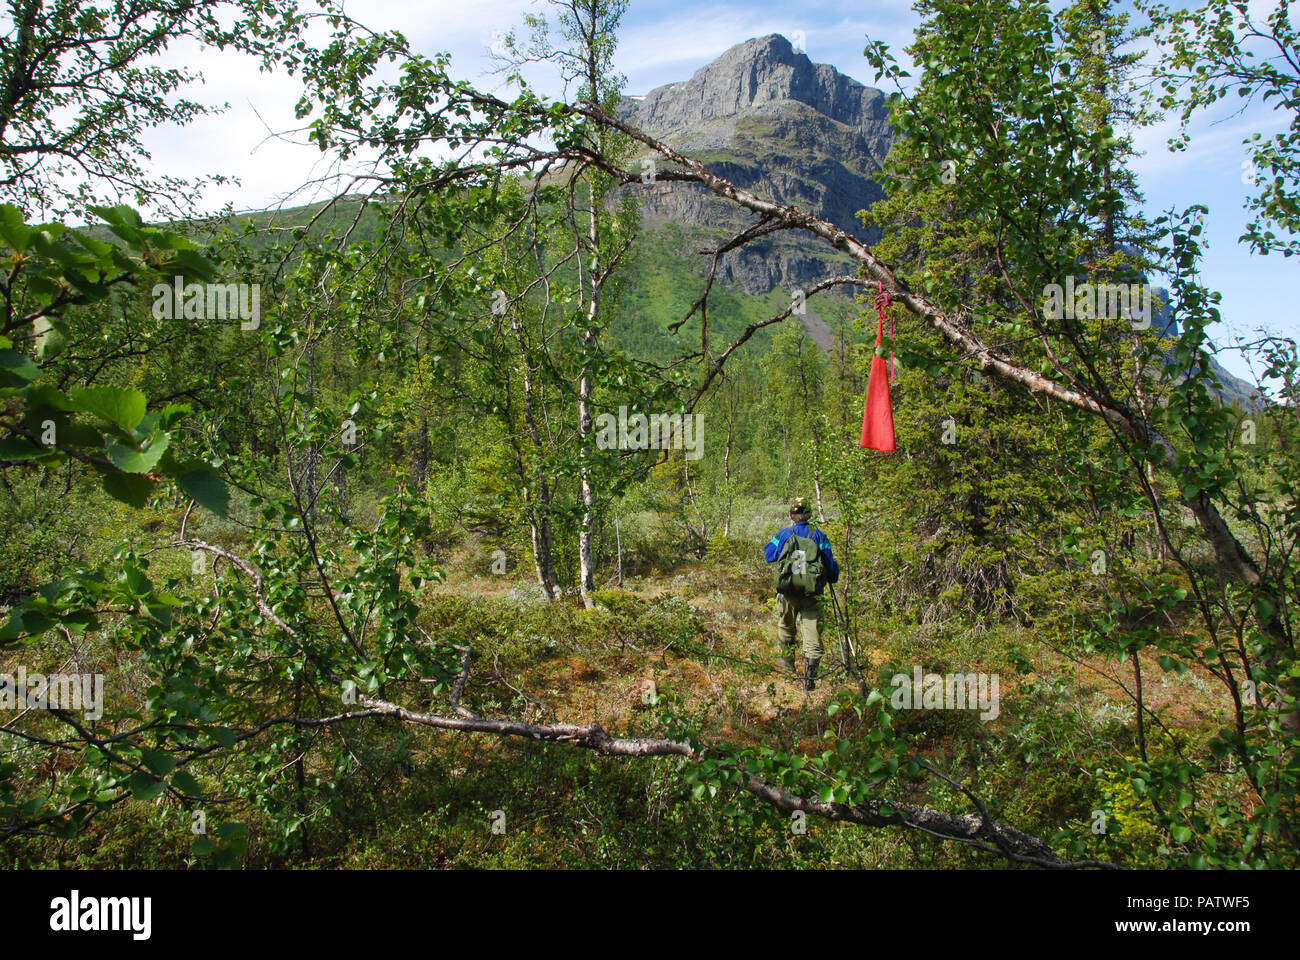 Sarek National Park - Hiking to Mount Tjahkkelij. Jokkmokk, Norrbotten, Sweden Stock Photo